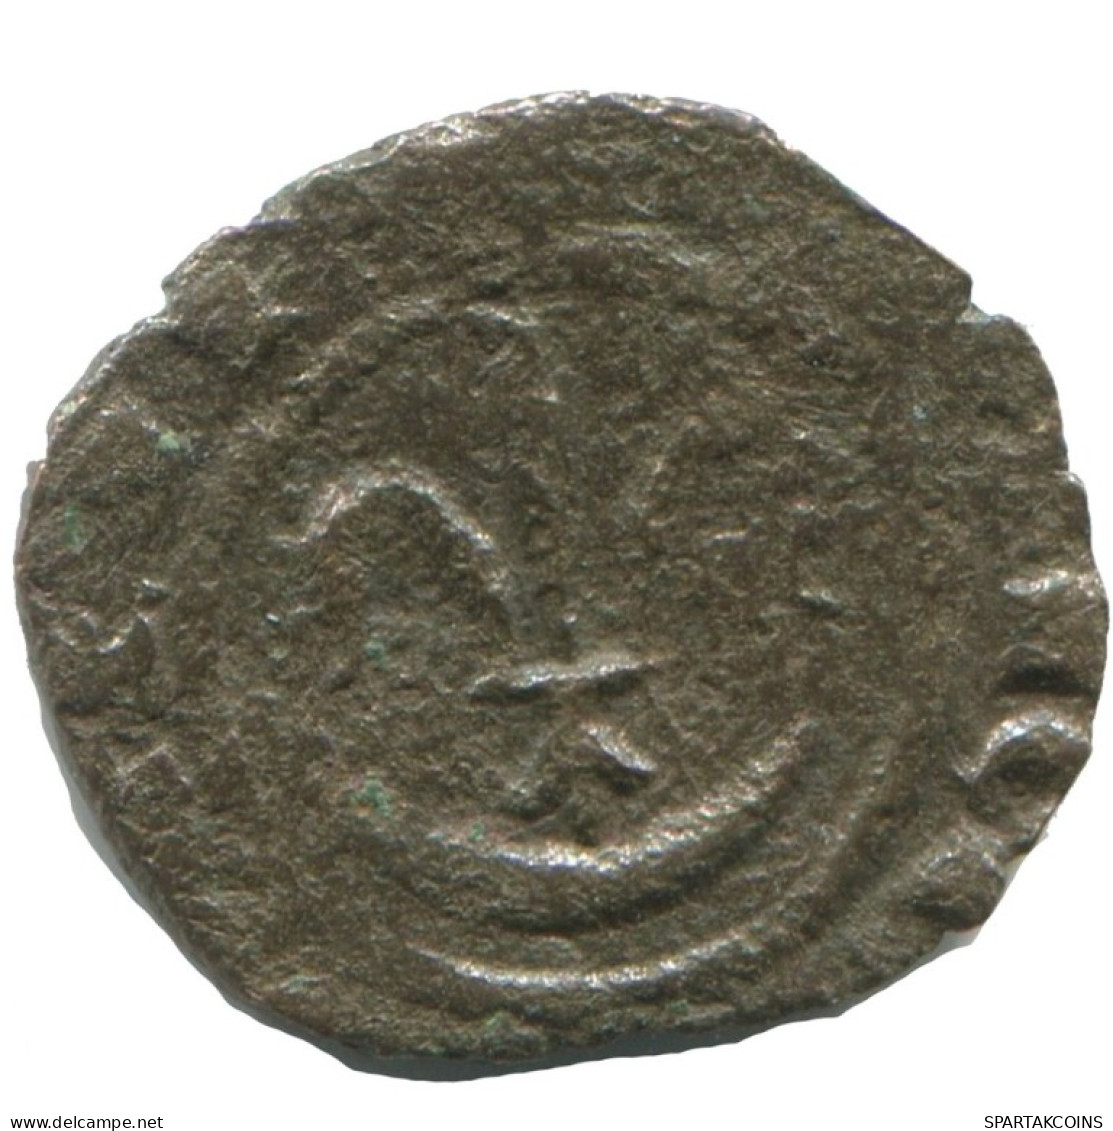 CRUSADER CROSS Authentic Original MEDIEVAL EUROPEAN Coin 0.6g/15mm #AC332.8.E.A